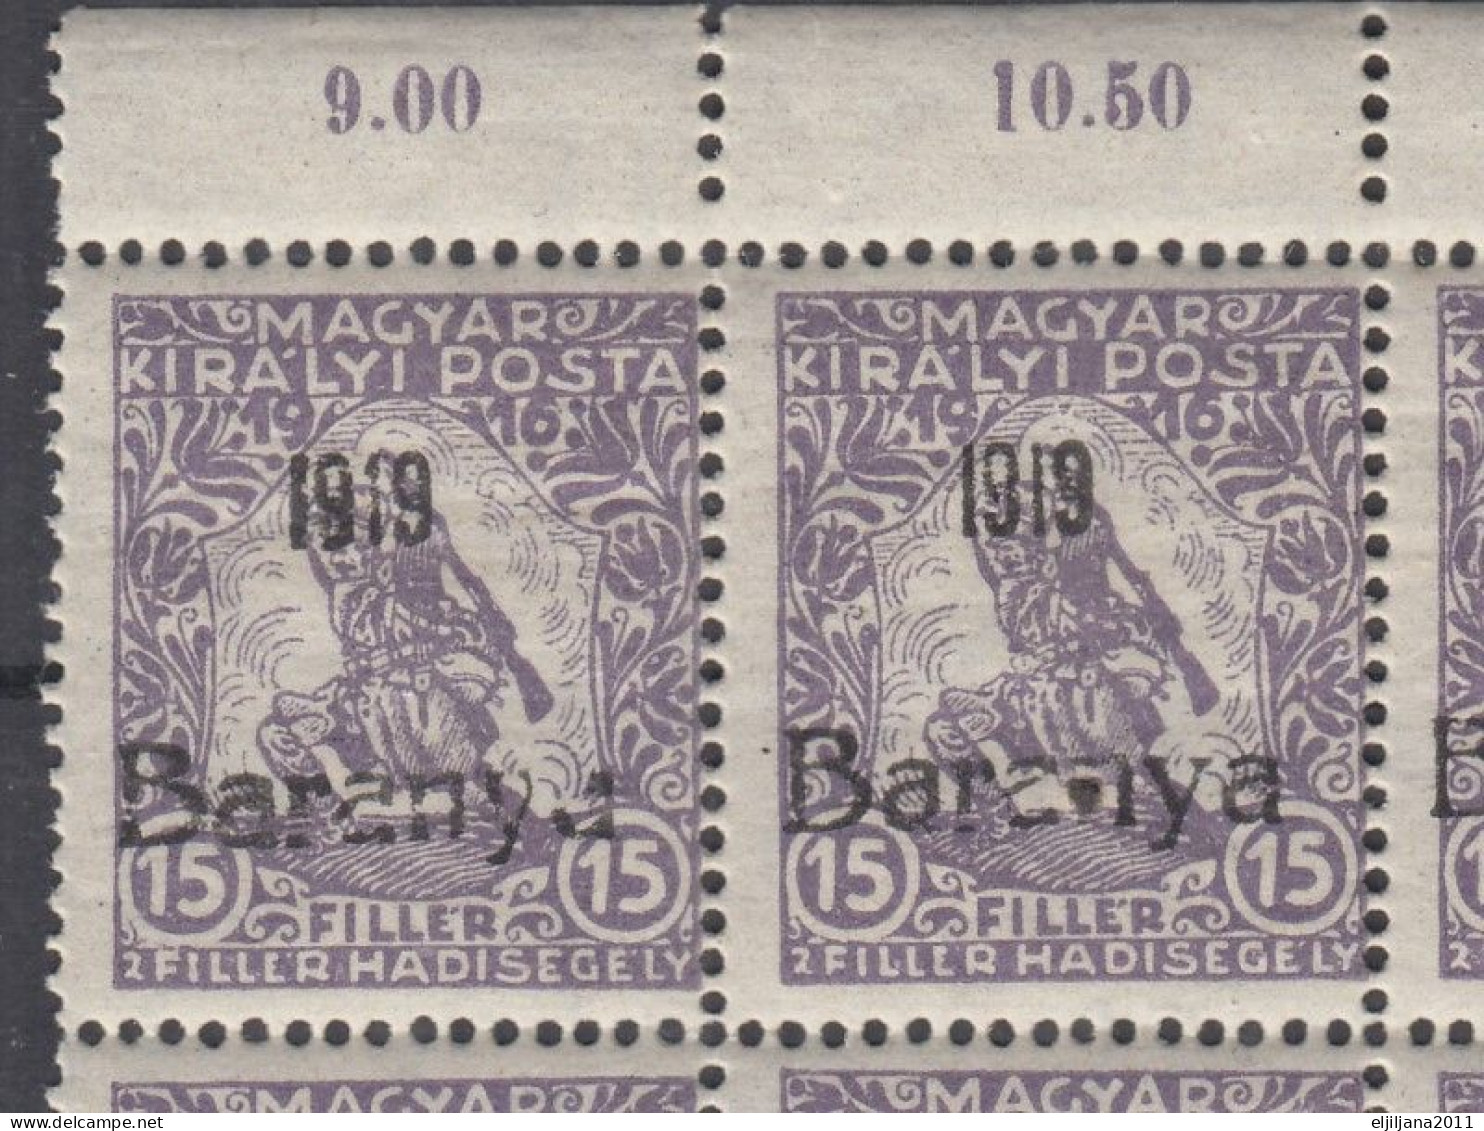 ⁕ Hungary 1919 Baranya Overprint Mi.17 (Mi.184) ⁕ MNH Block / Sheet Of 15 Stamps, ERROR - See Scan - Baranya